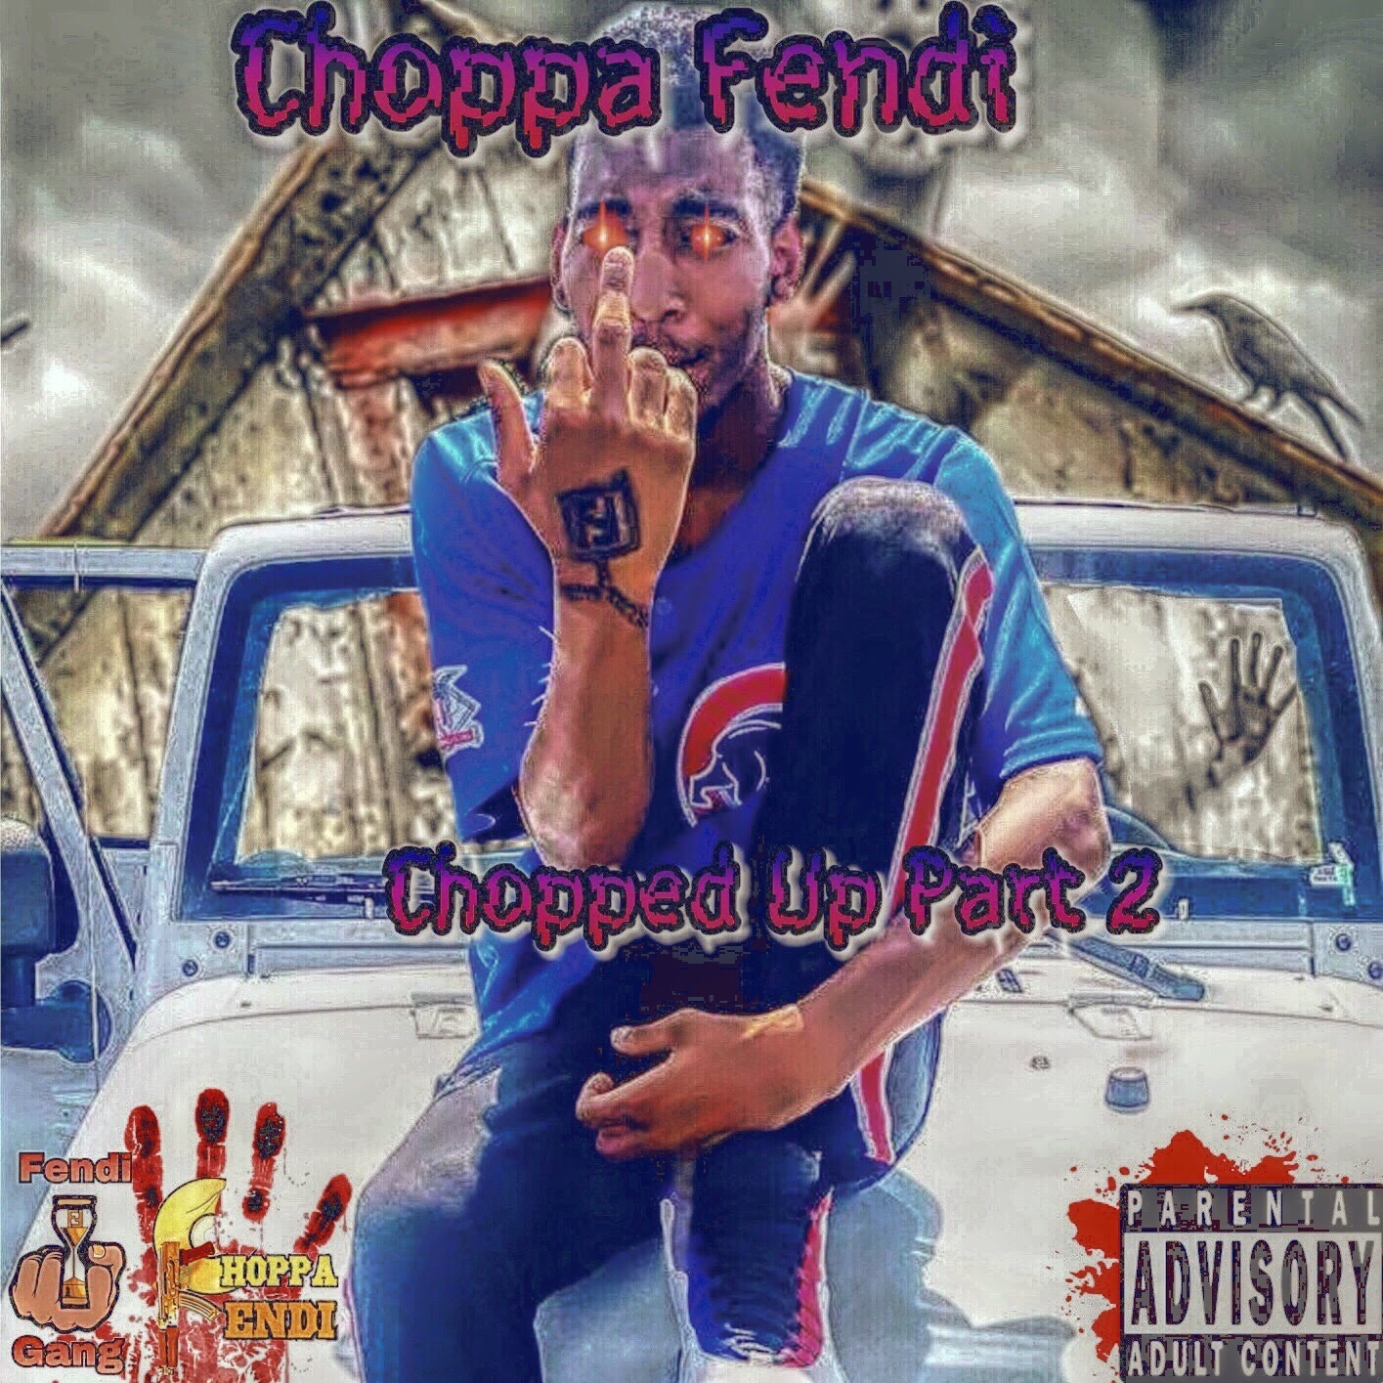 Choppa Fendi - Chopped Up Part 2 (Album Cover)